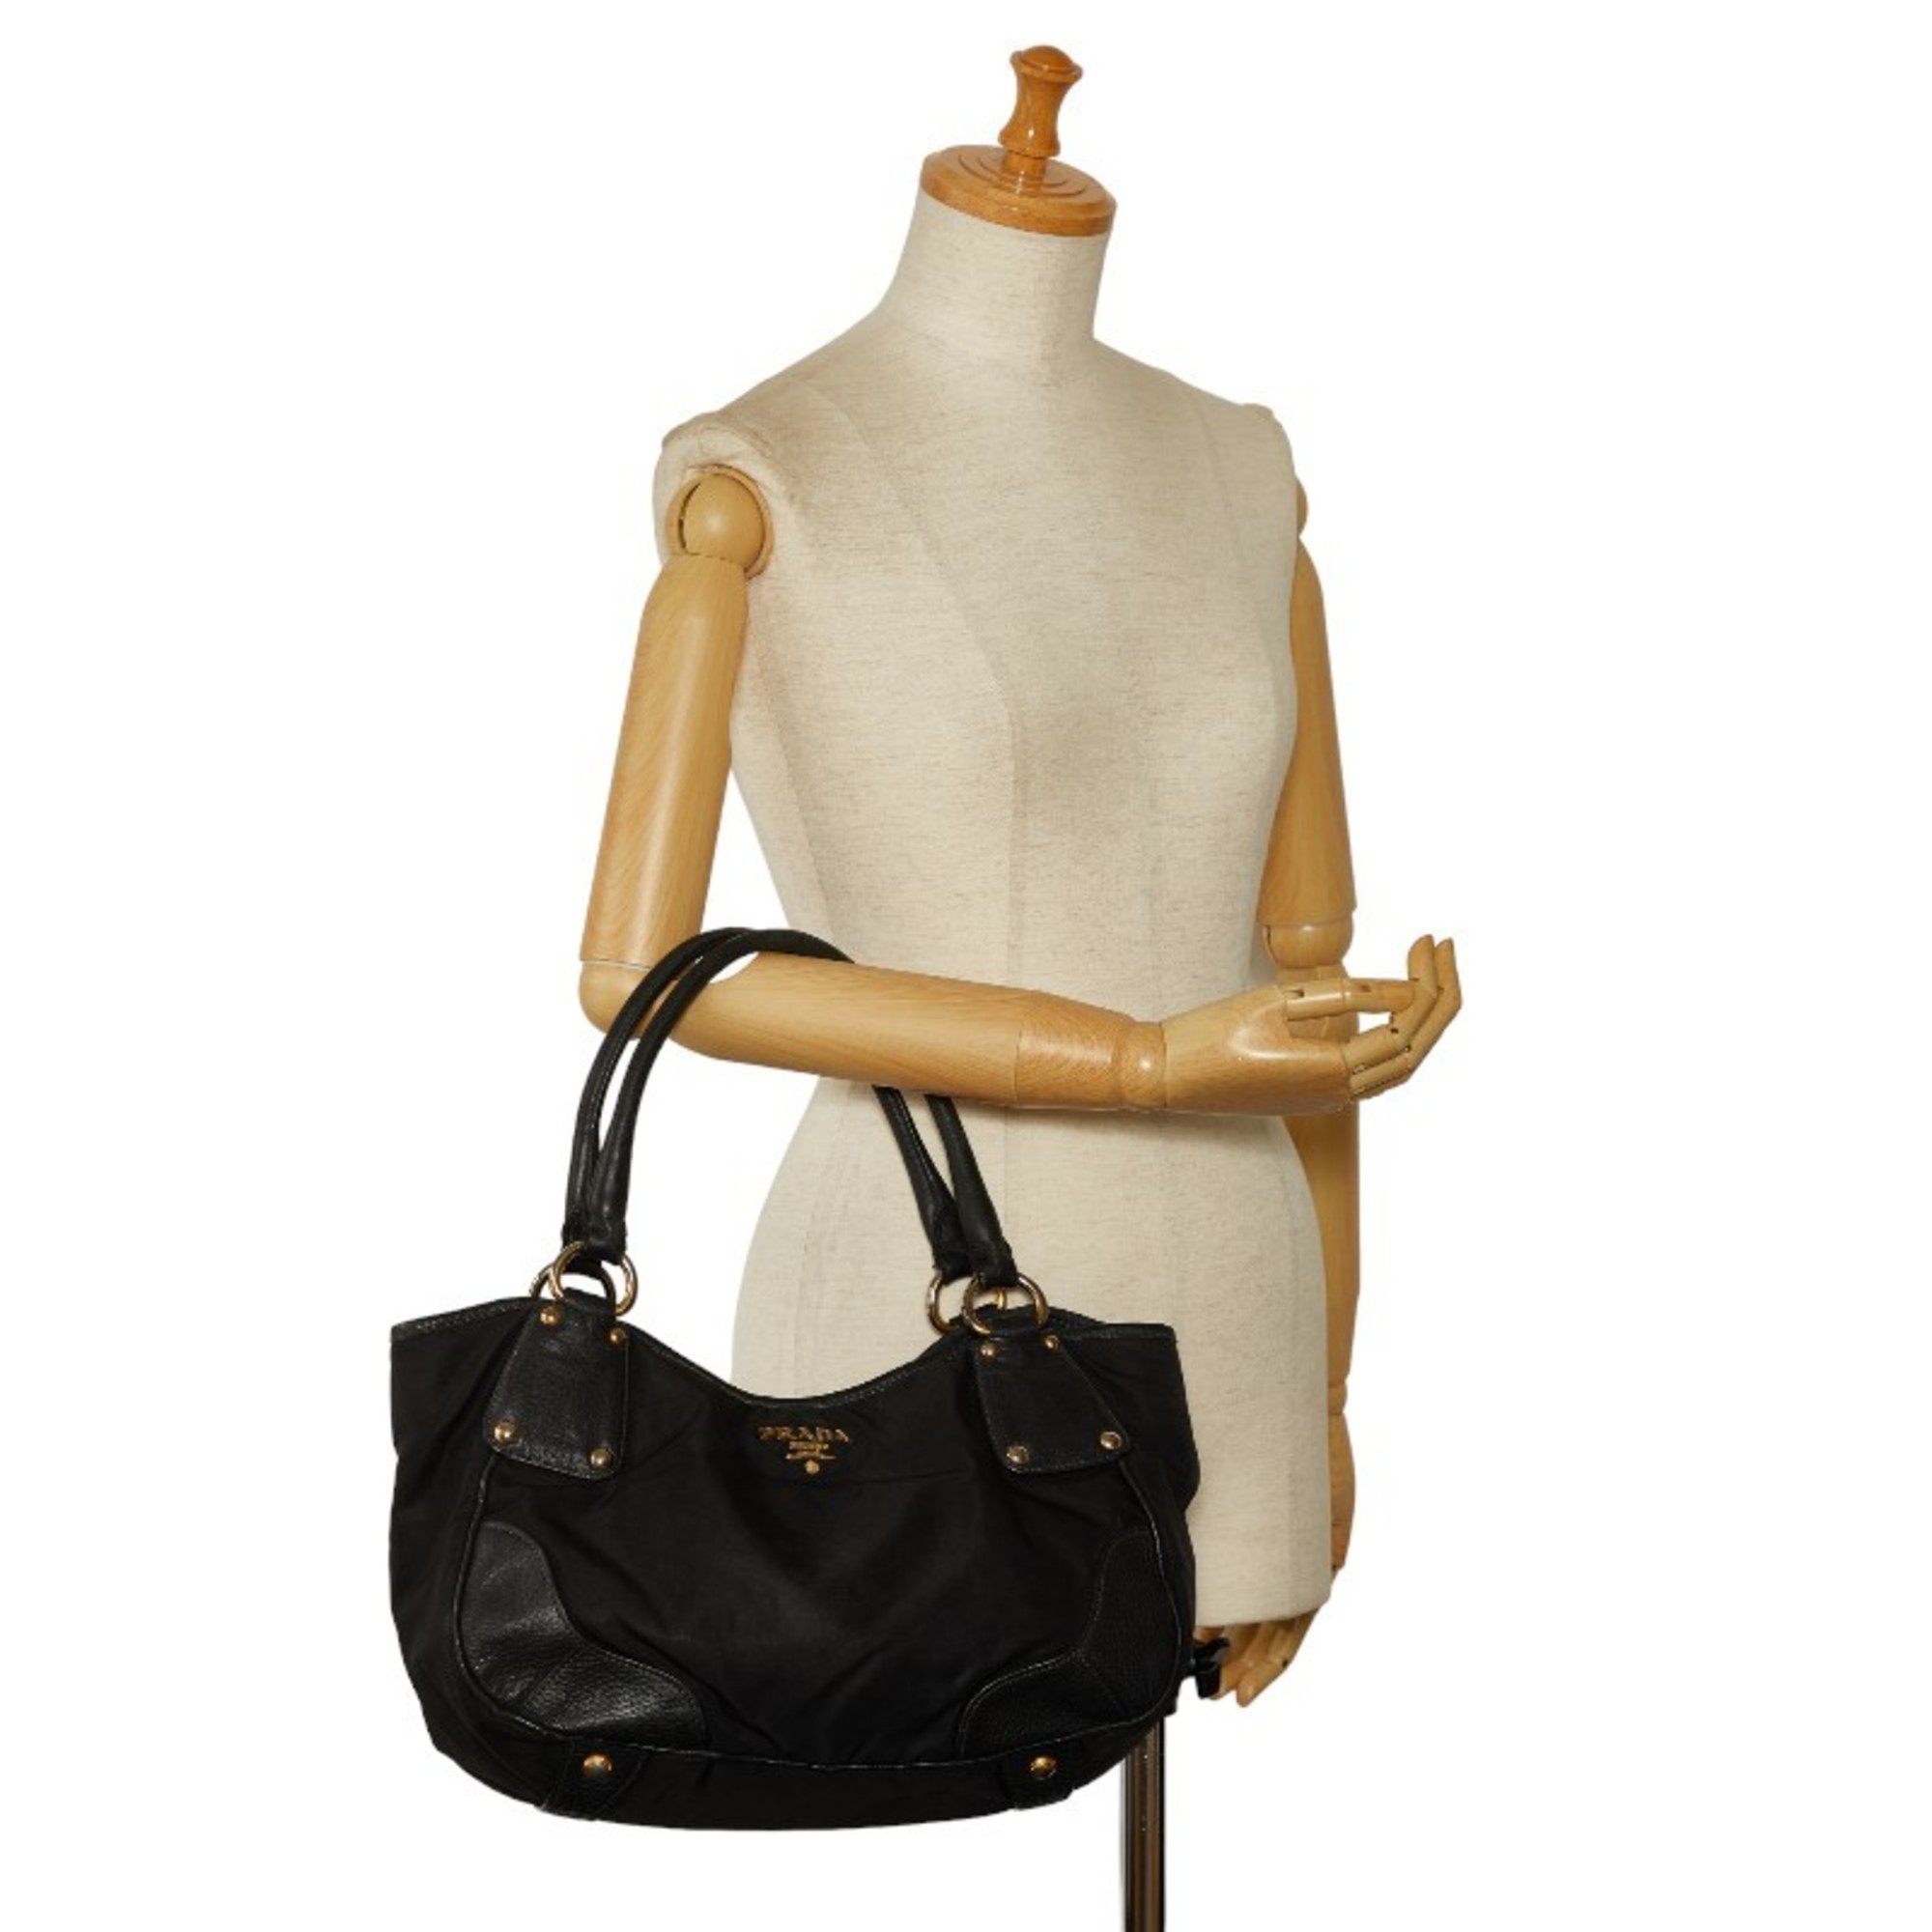 Prada handbag black nylon leather women's PRADA